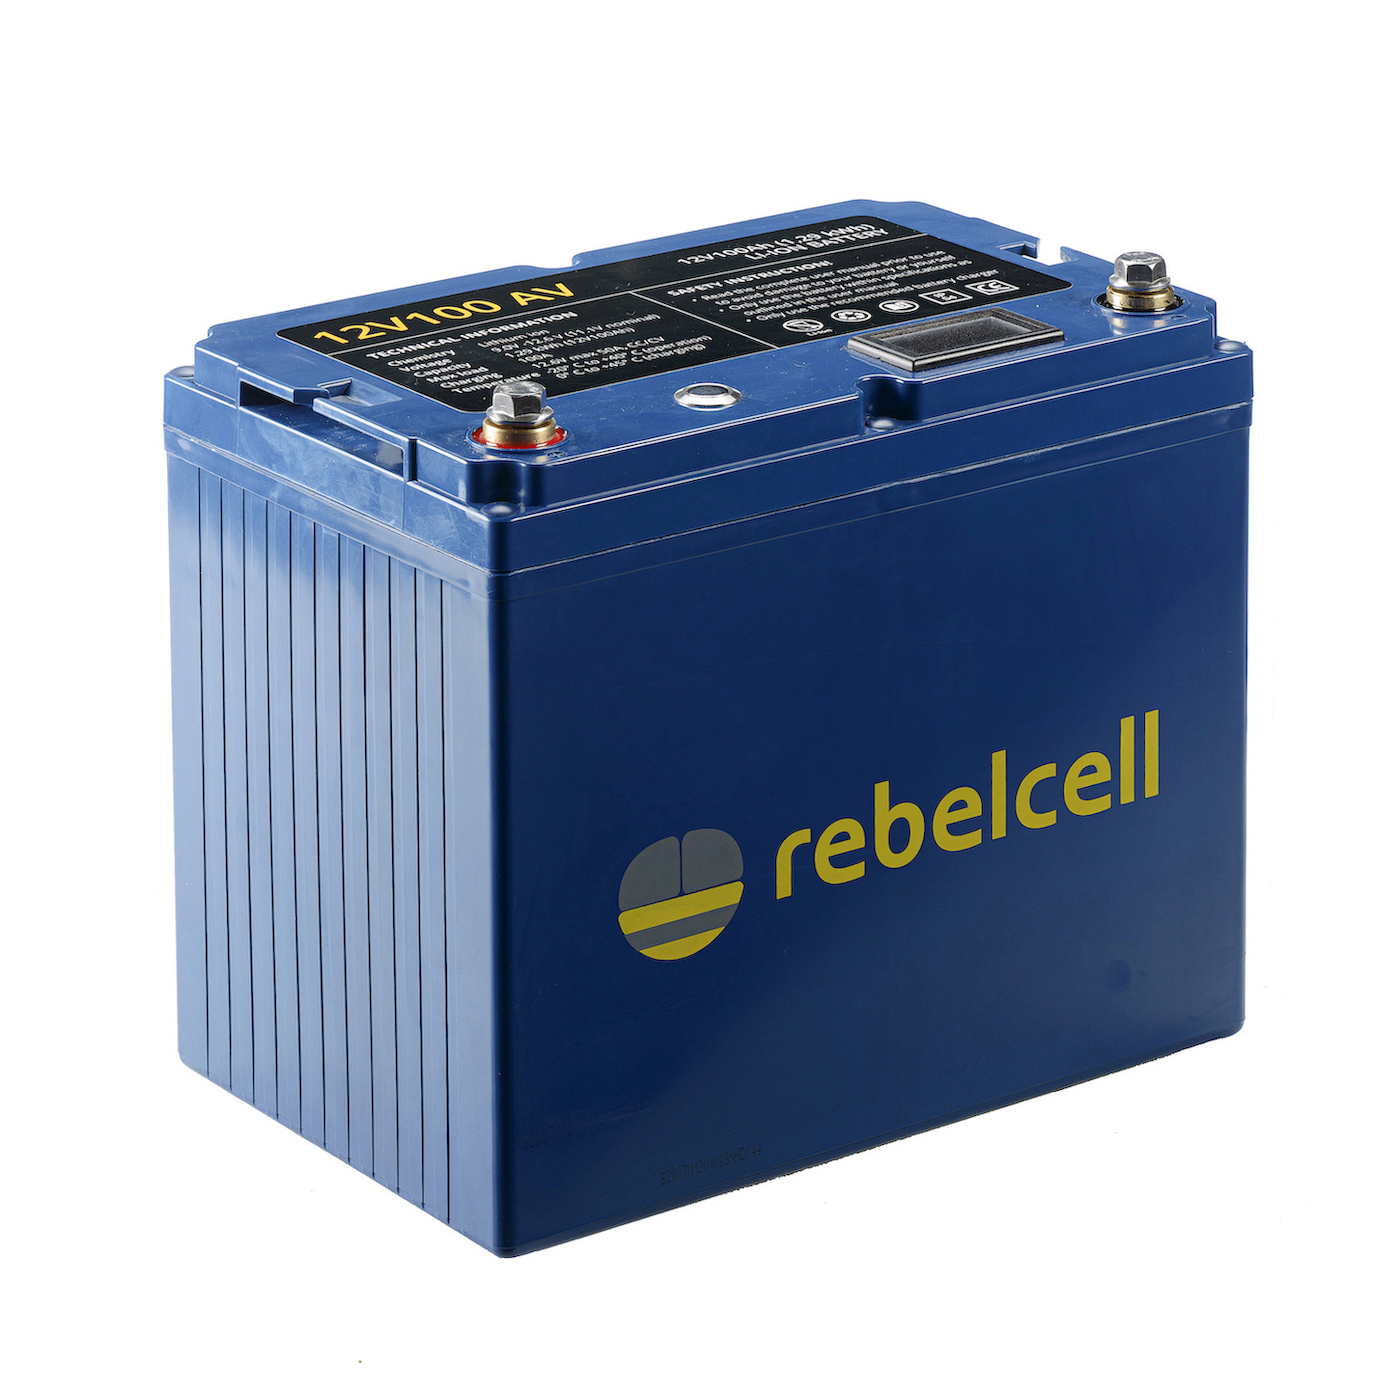 geeuwen Netto Nieuwe aankomst 12 V 100 Ah Rebelcell Lithium Battery with display